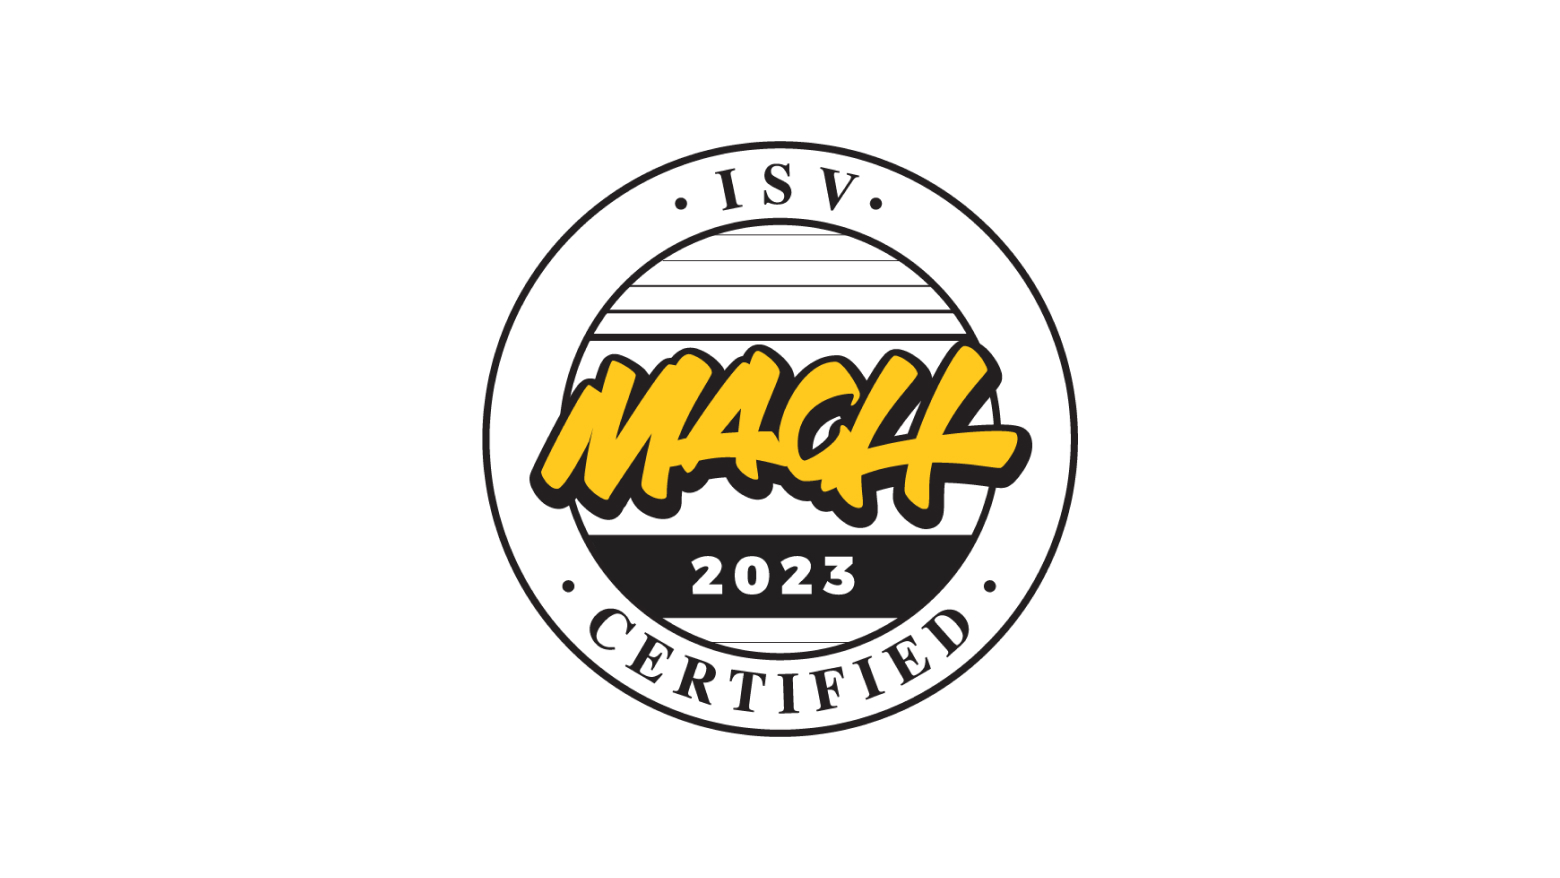 MACH ISV Certified, 2023 Seal